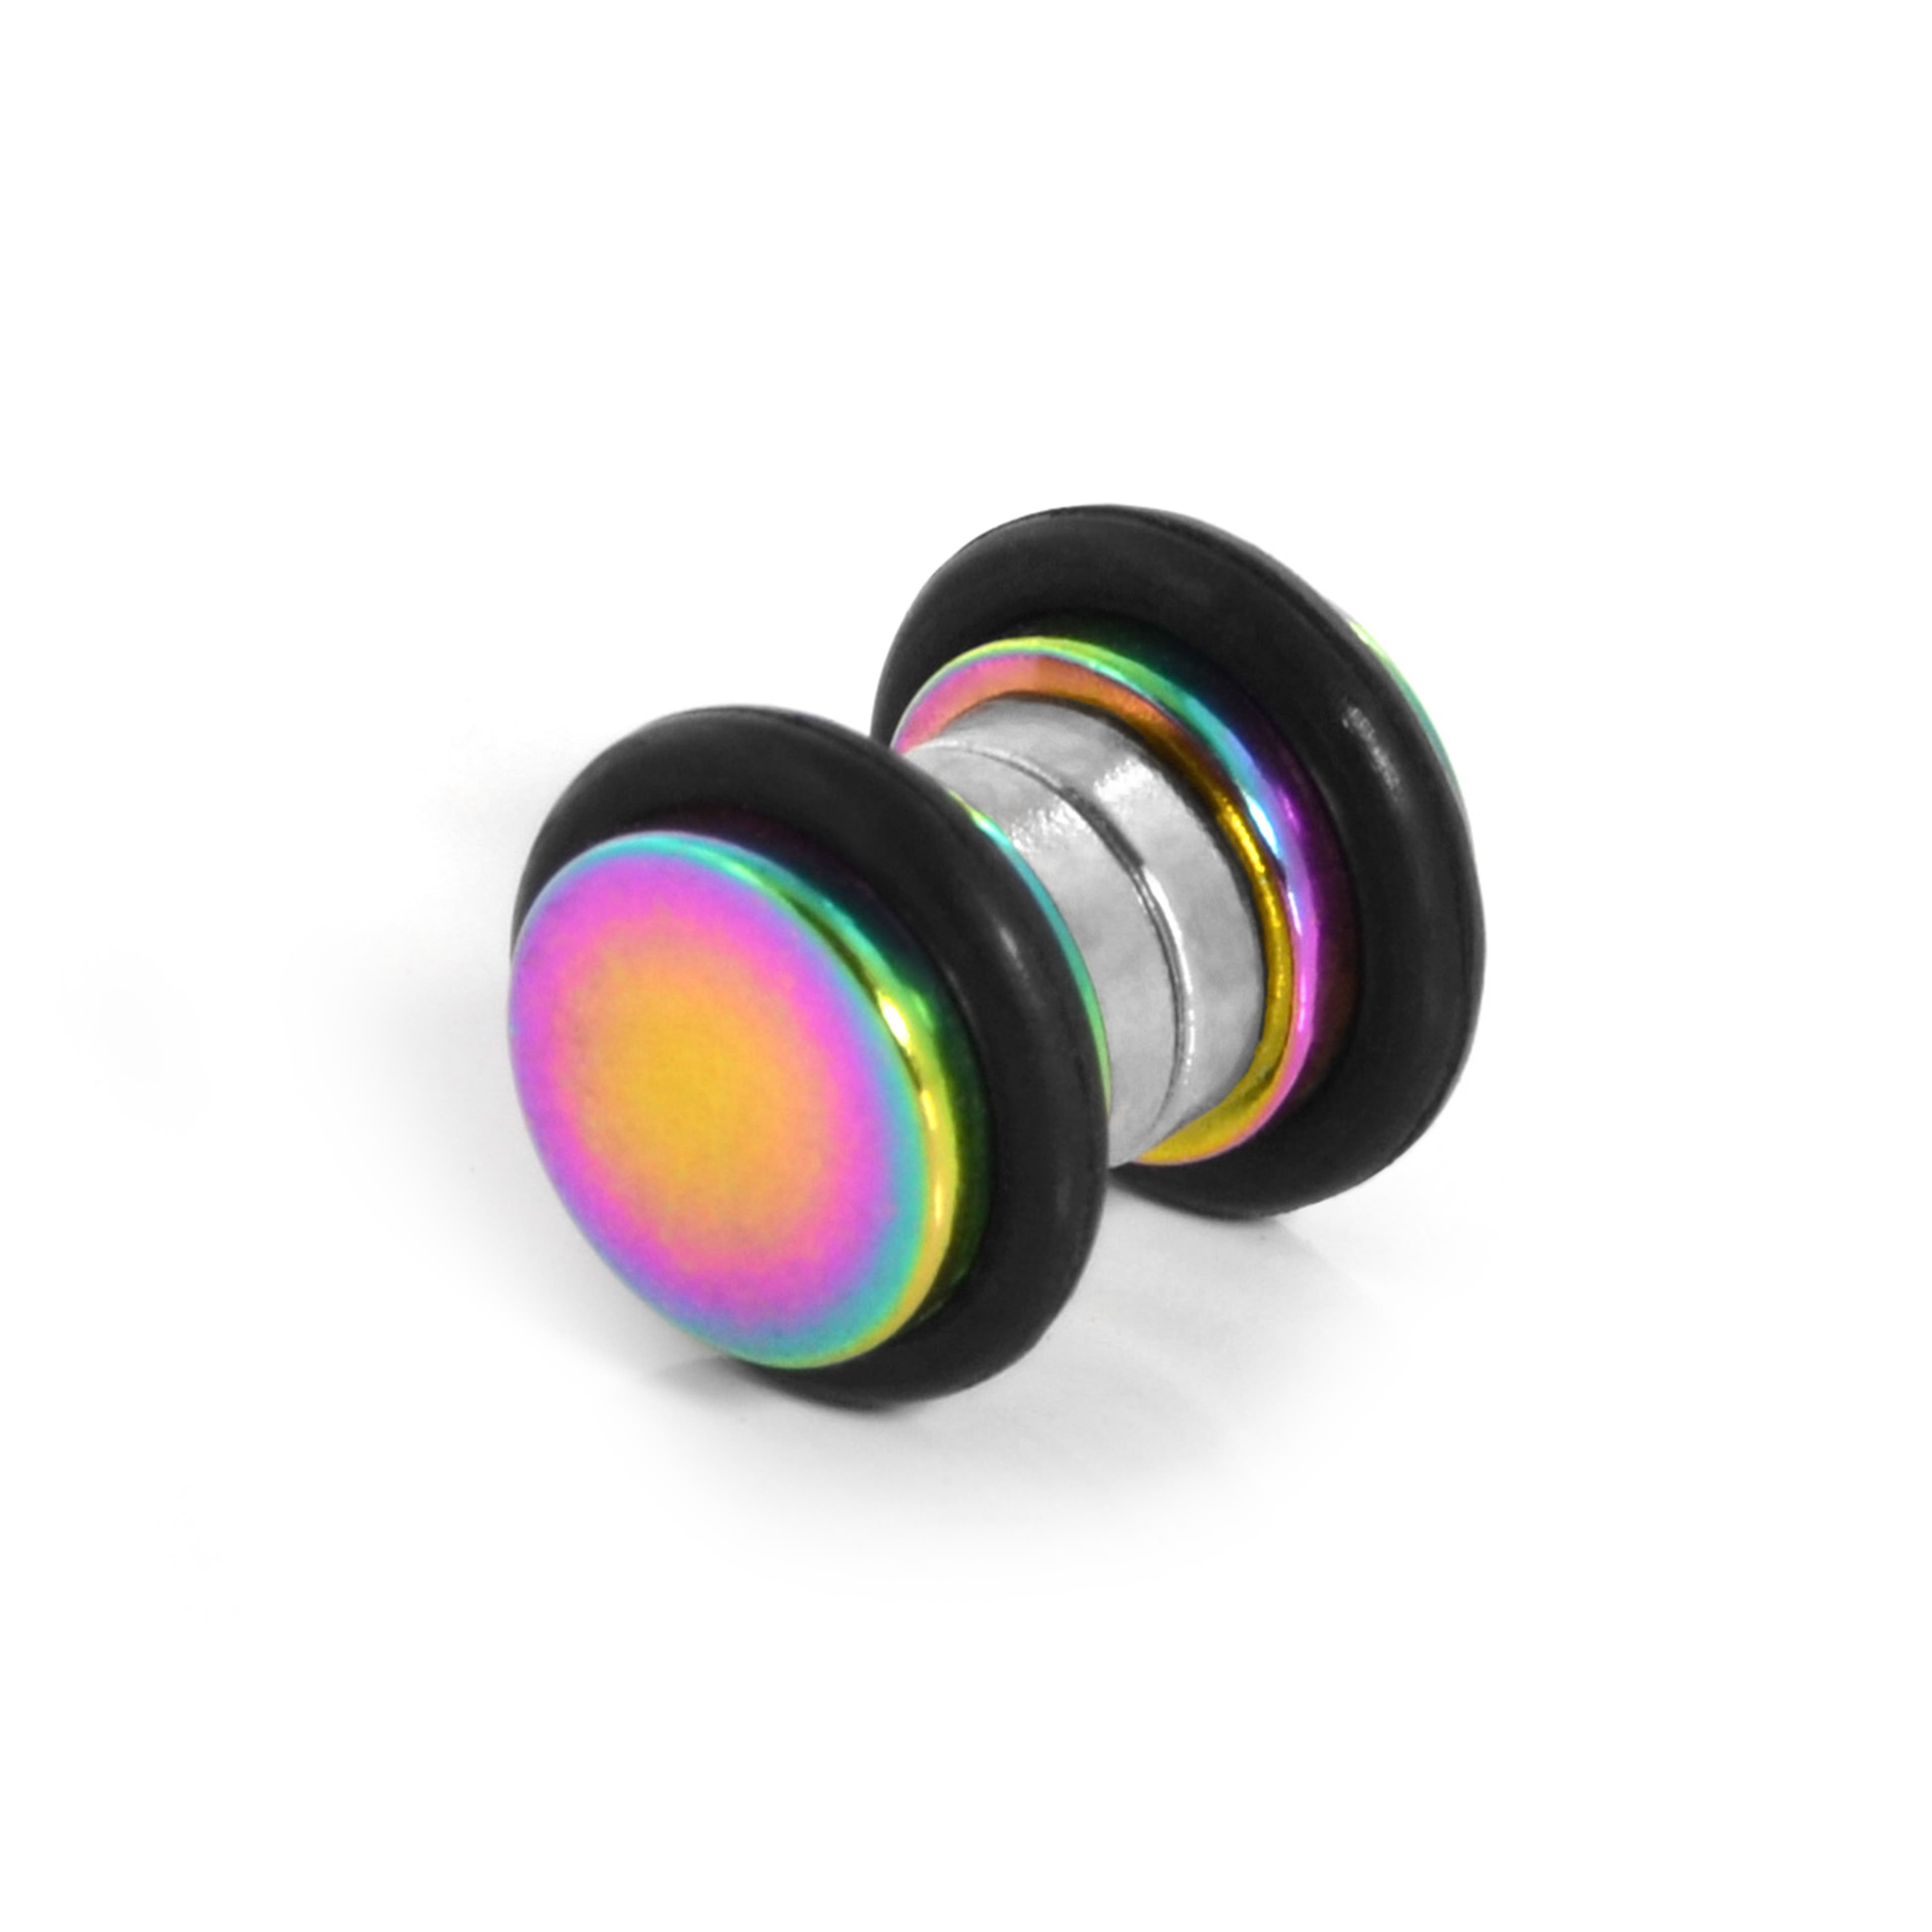 6 mm Rainbow Stainless Steel & Black Rubber Magnetic Earring